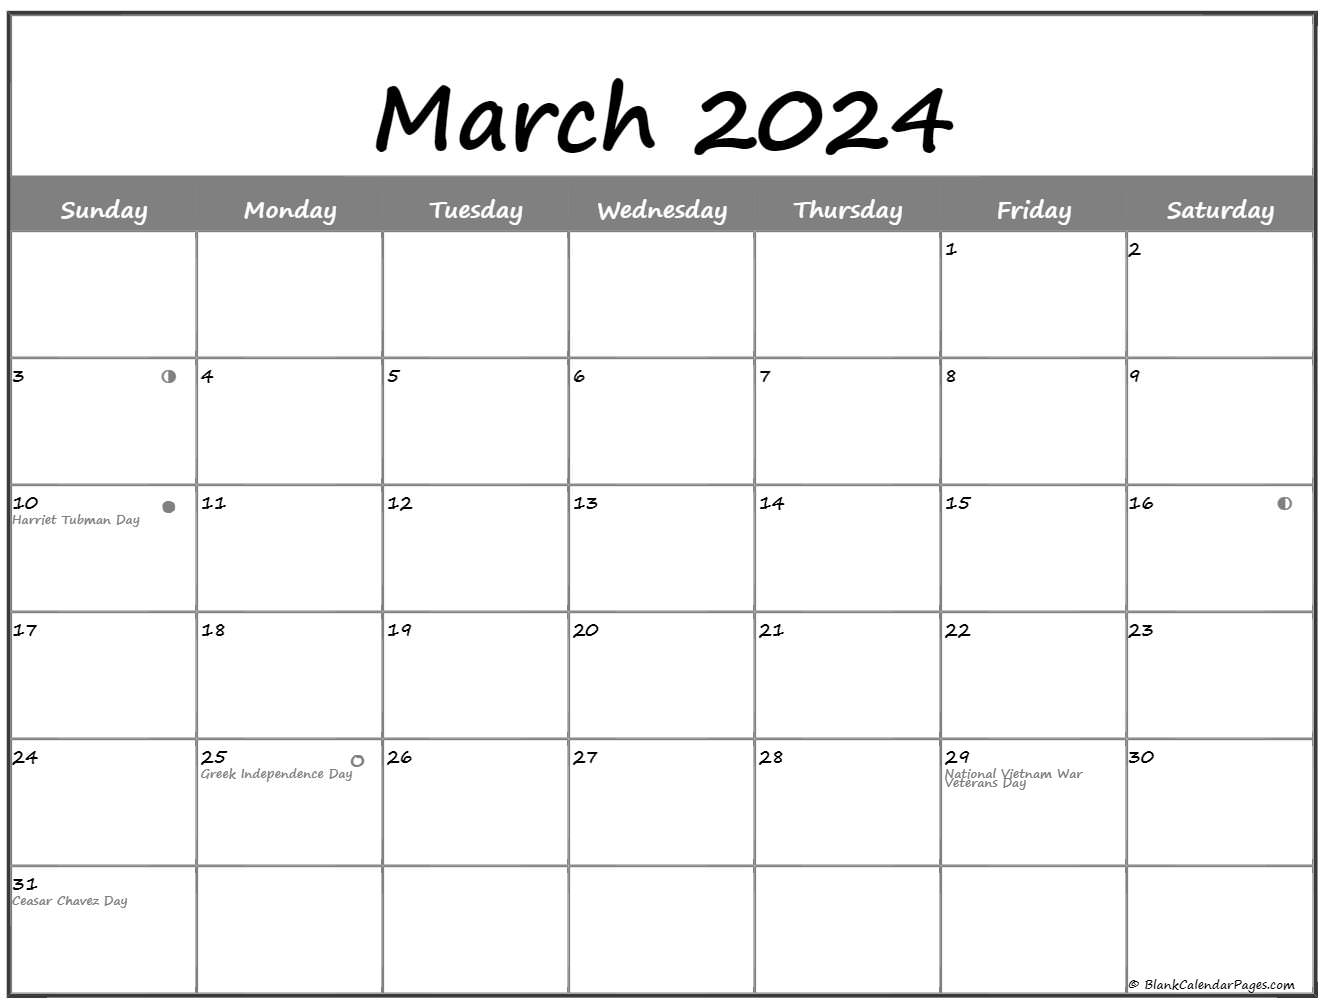 Moon Calendar March 2022 March 2022 Lunar Calendar | Moon Phase Calendar